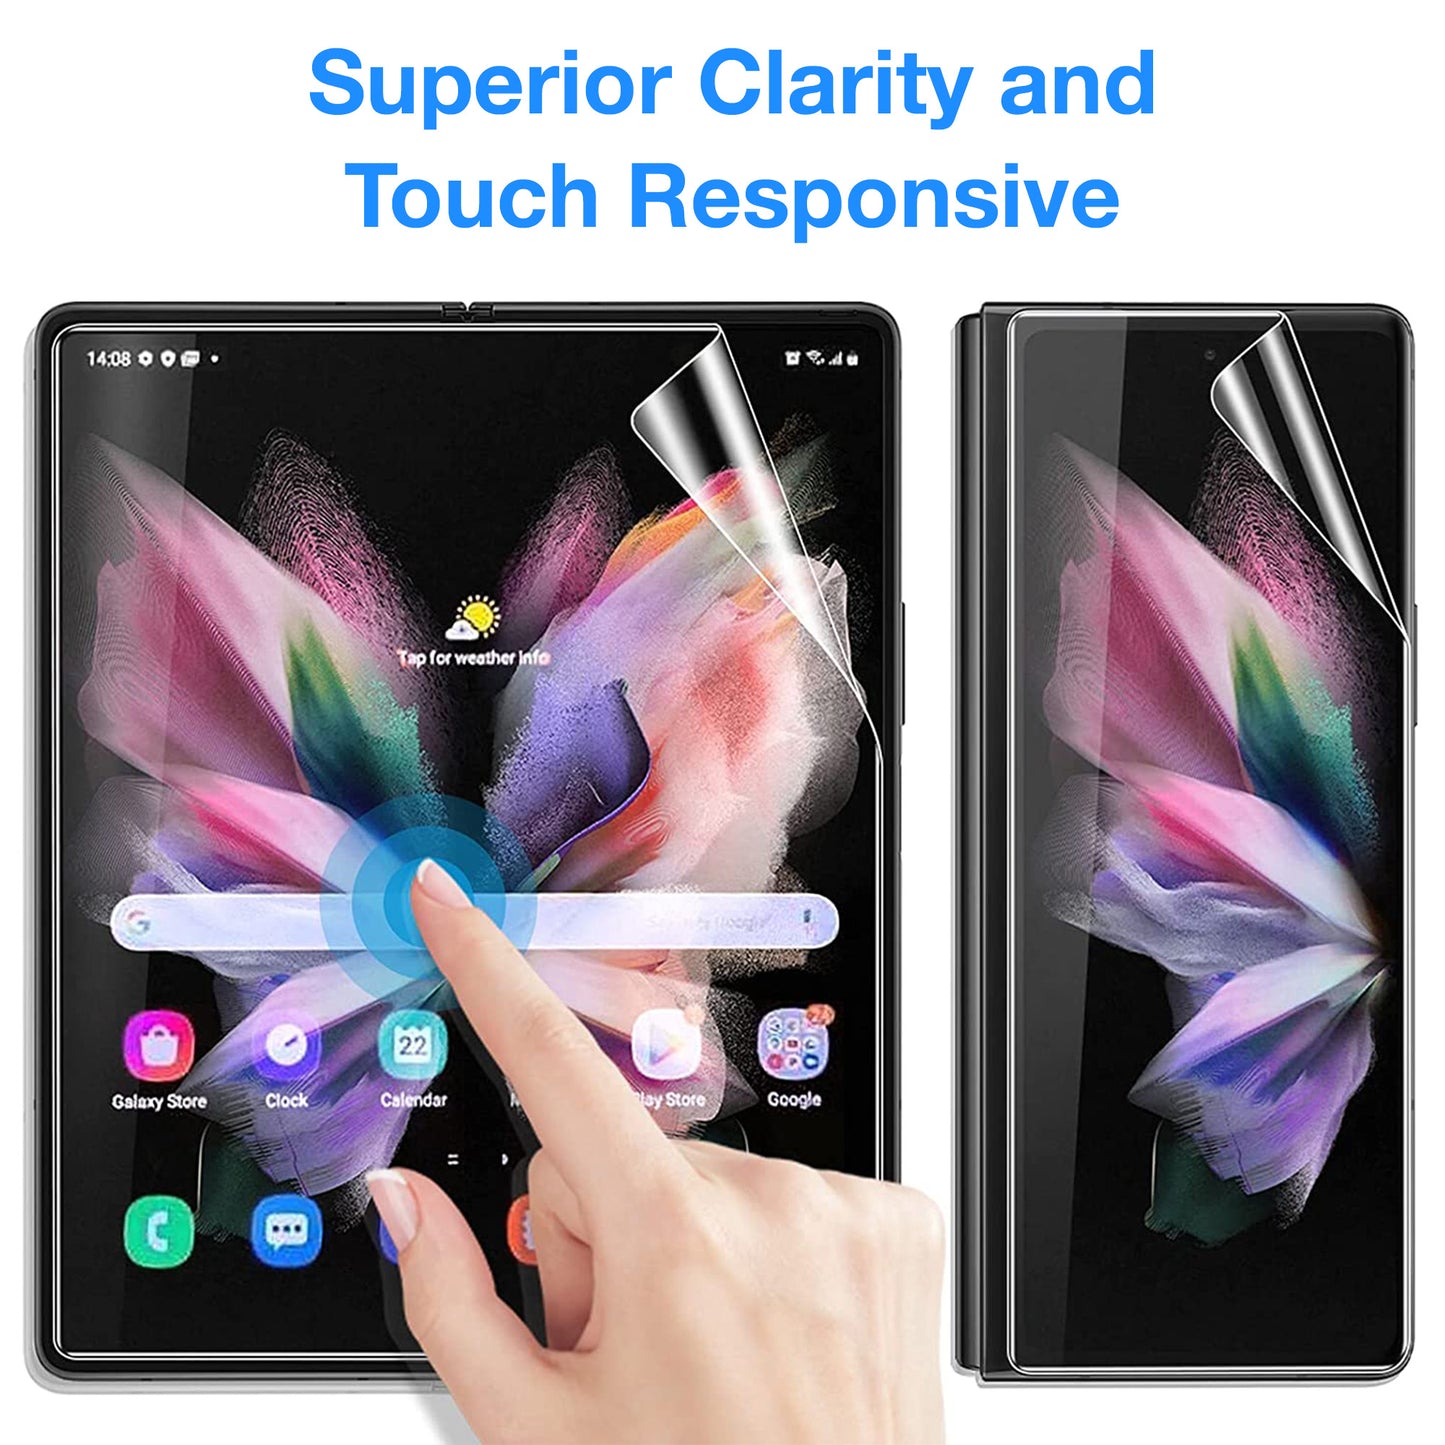 [3x in 1] MEZON Samsung Galaxy Z Fold4 Premium Hydrogel Clear Edge-to-Edge Full Coverage Screen Protector Fingerprint Film